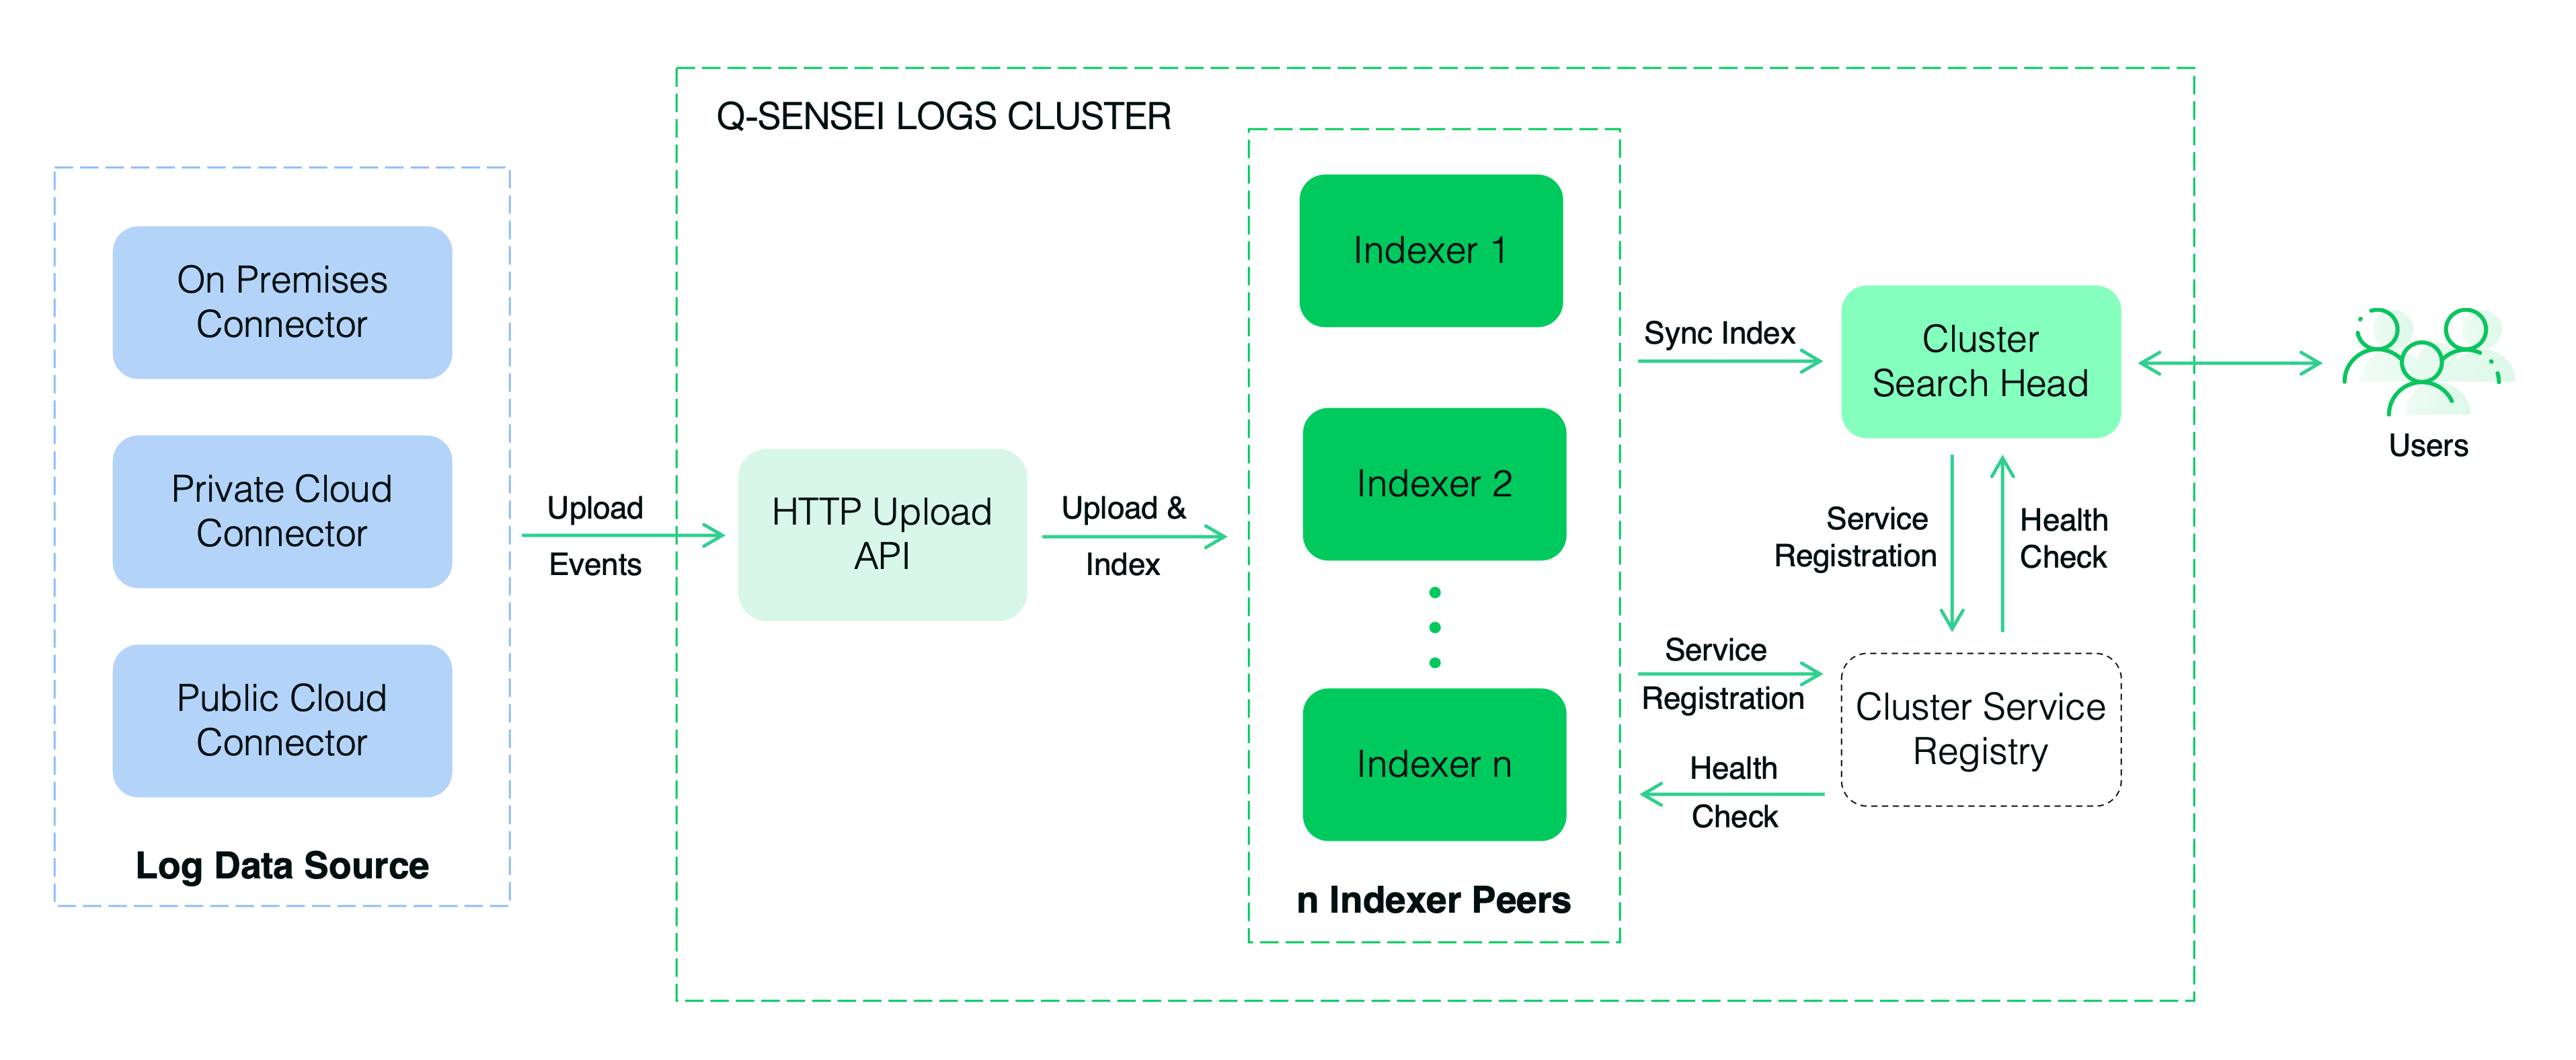 Q-Sensei_Logs_Cluster_Architecture.png